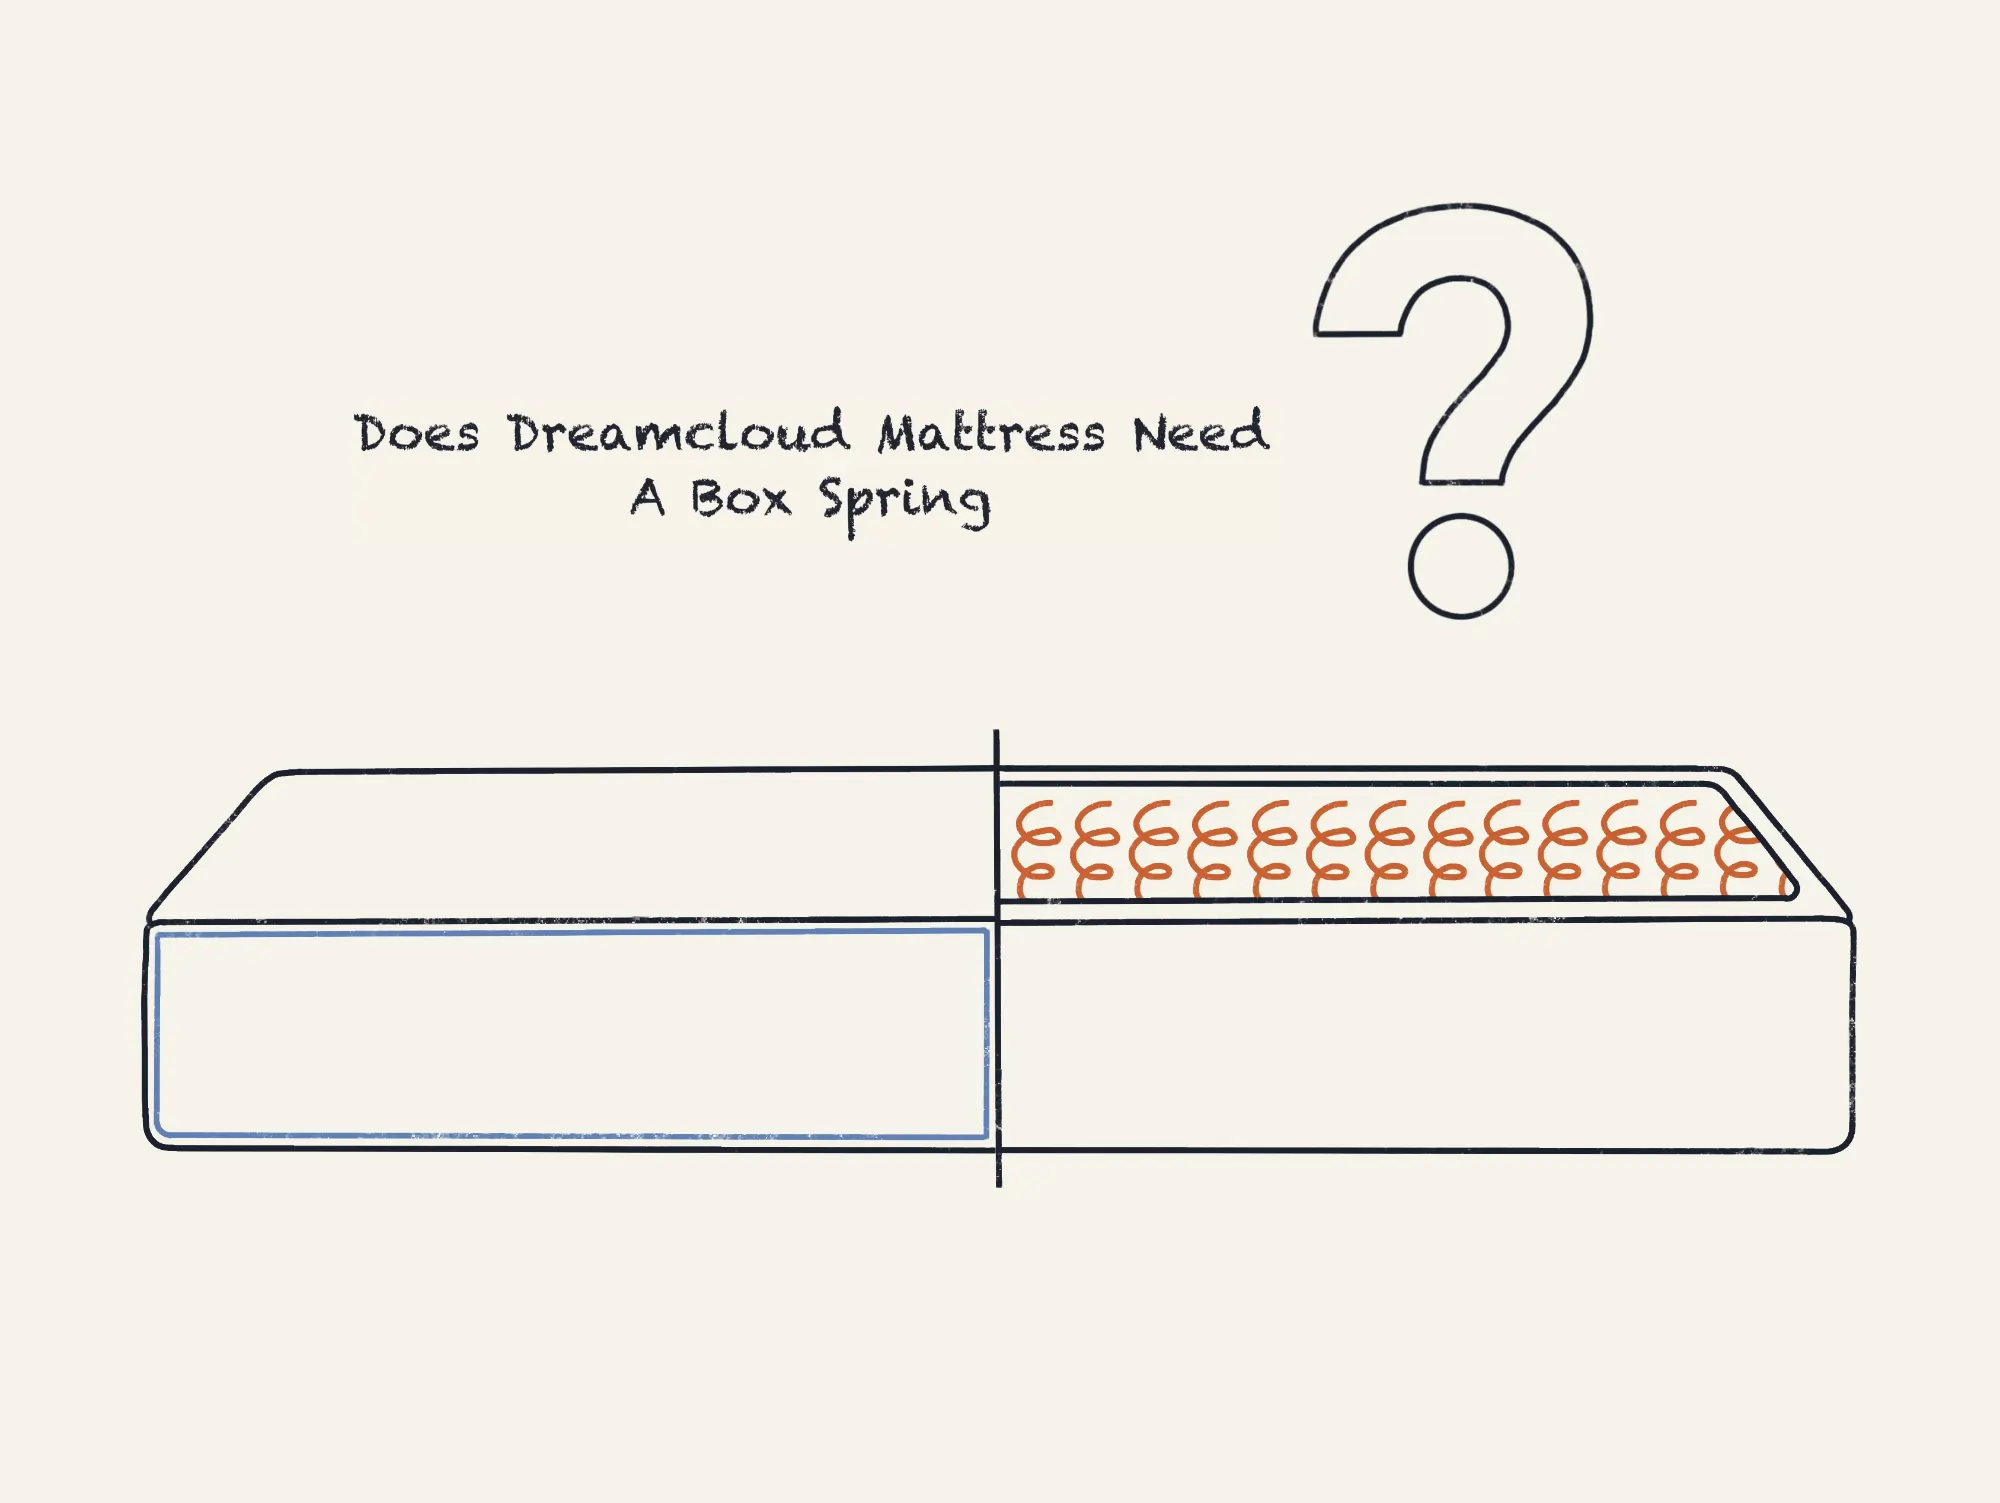 box spring for dreamcloud mattress